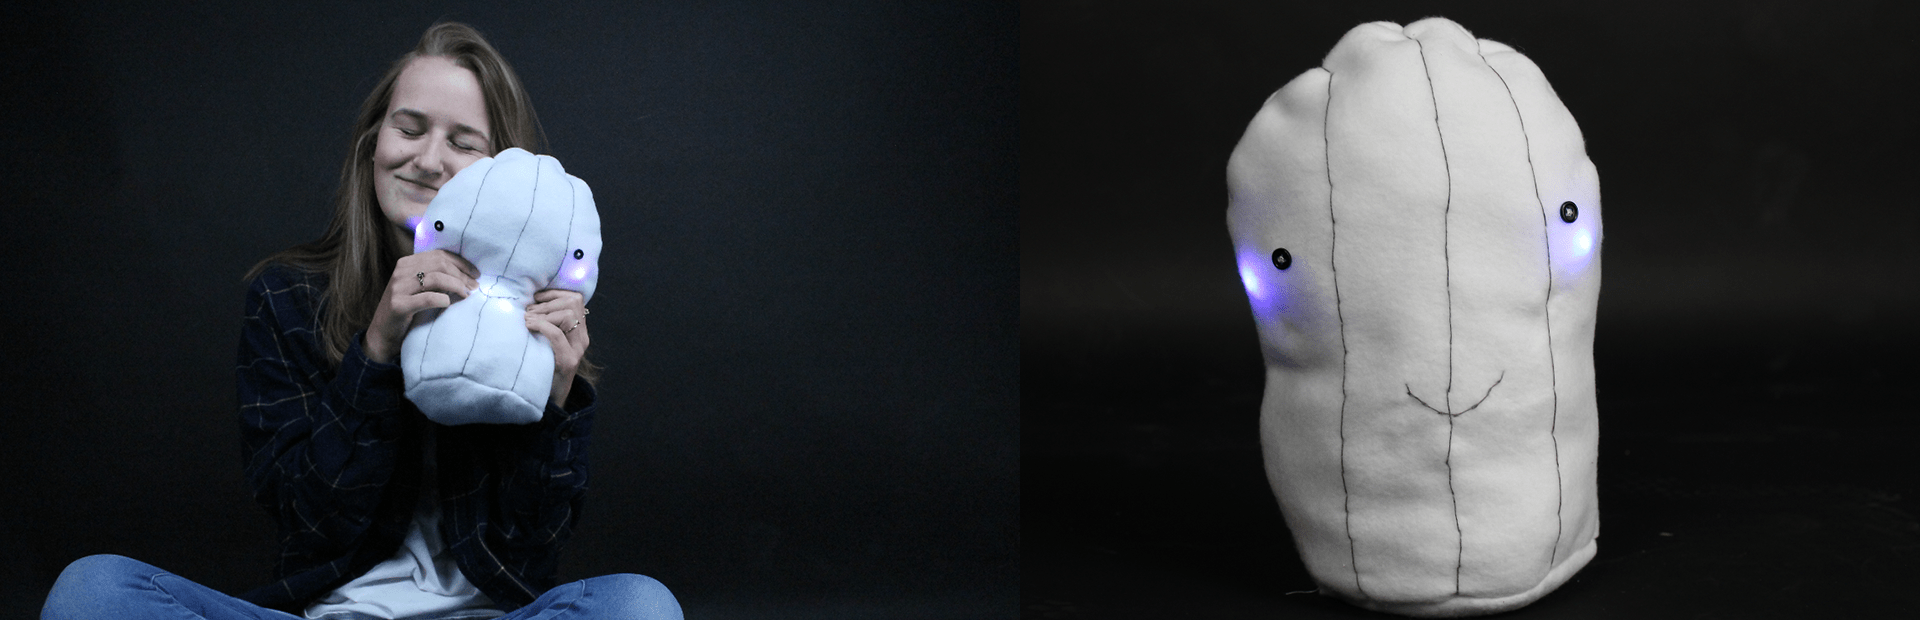 A plush, glowing ghost-like stuffed animal